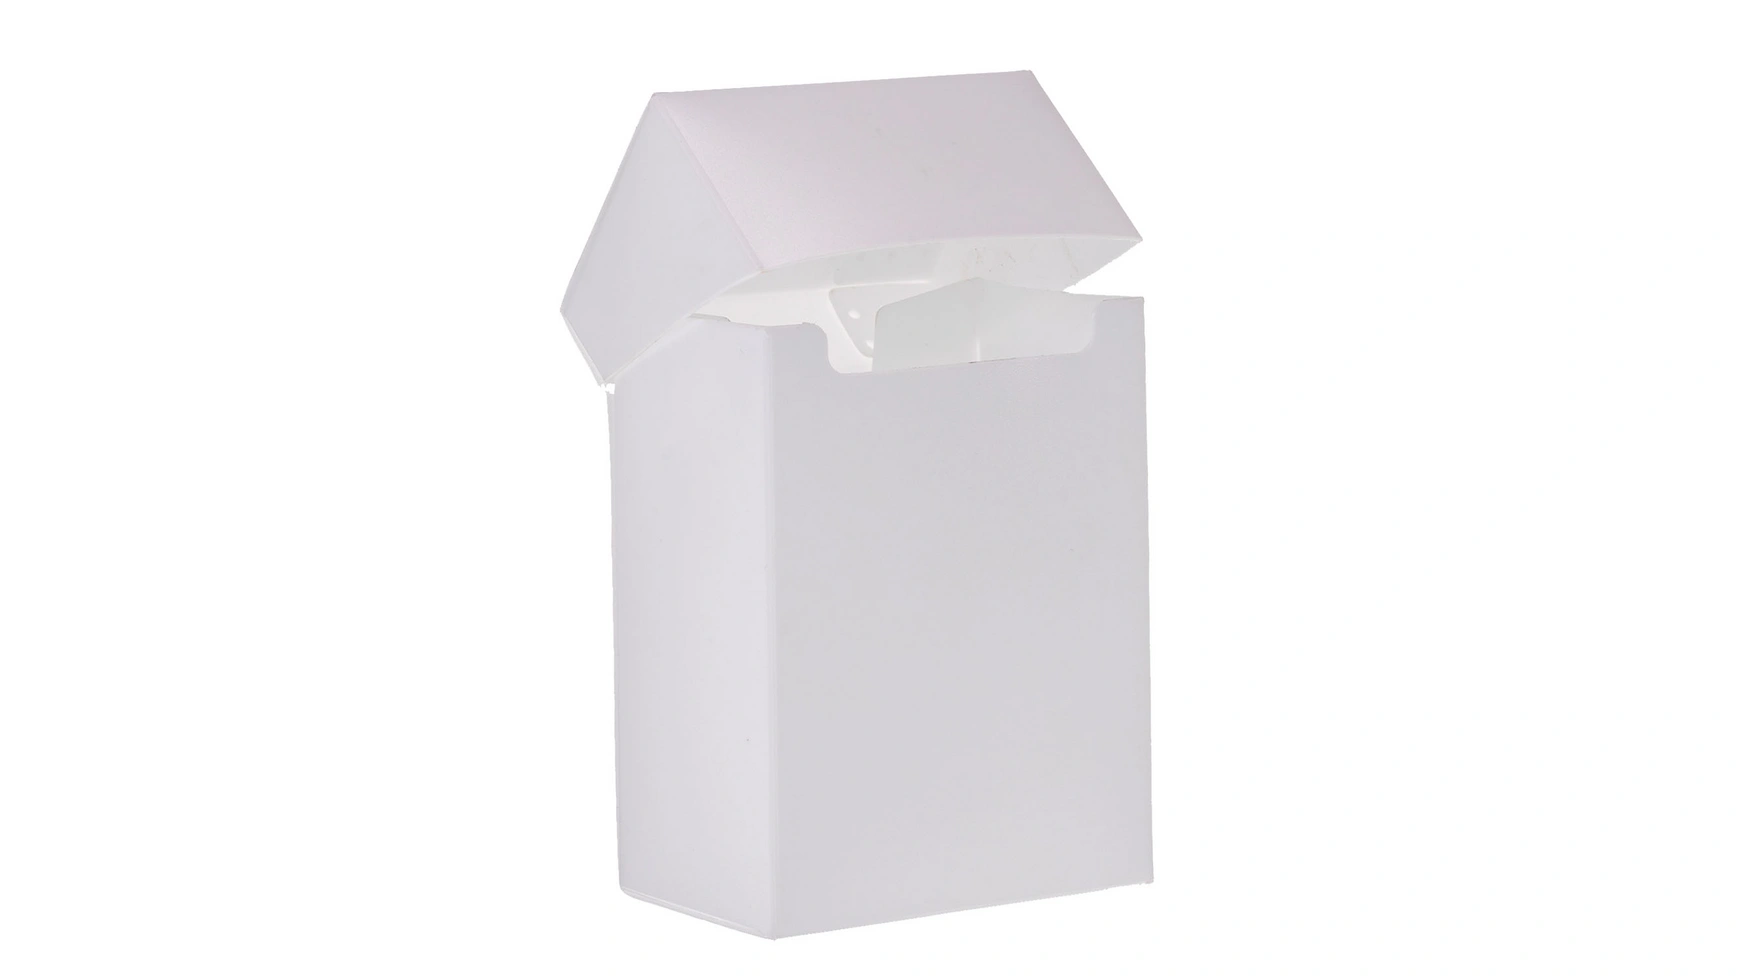 Müller Toy Place Картонная коробка белый Mueller кубок малый пластик лучший руководитель 13 х 7 5 х 7 5 см